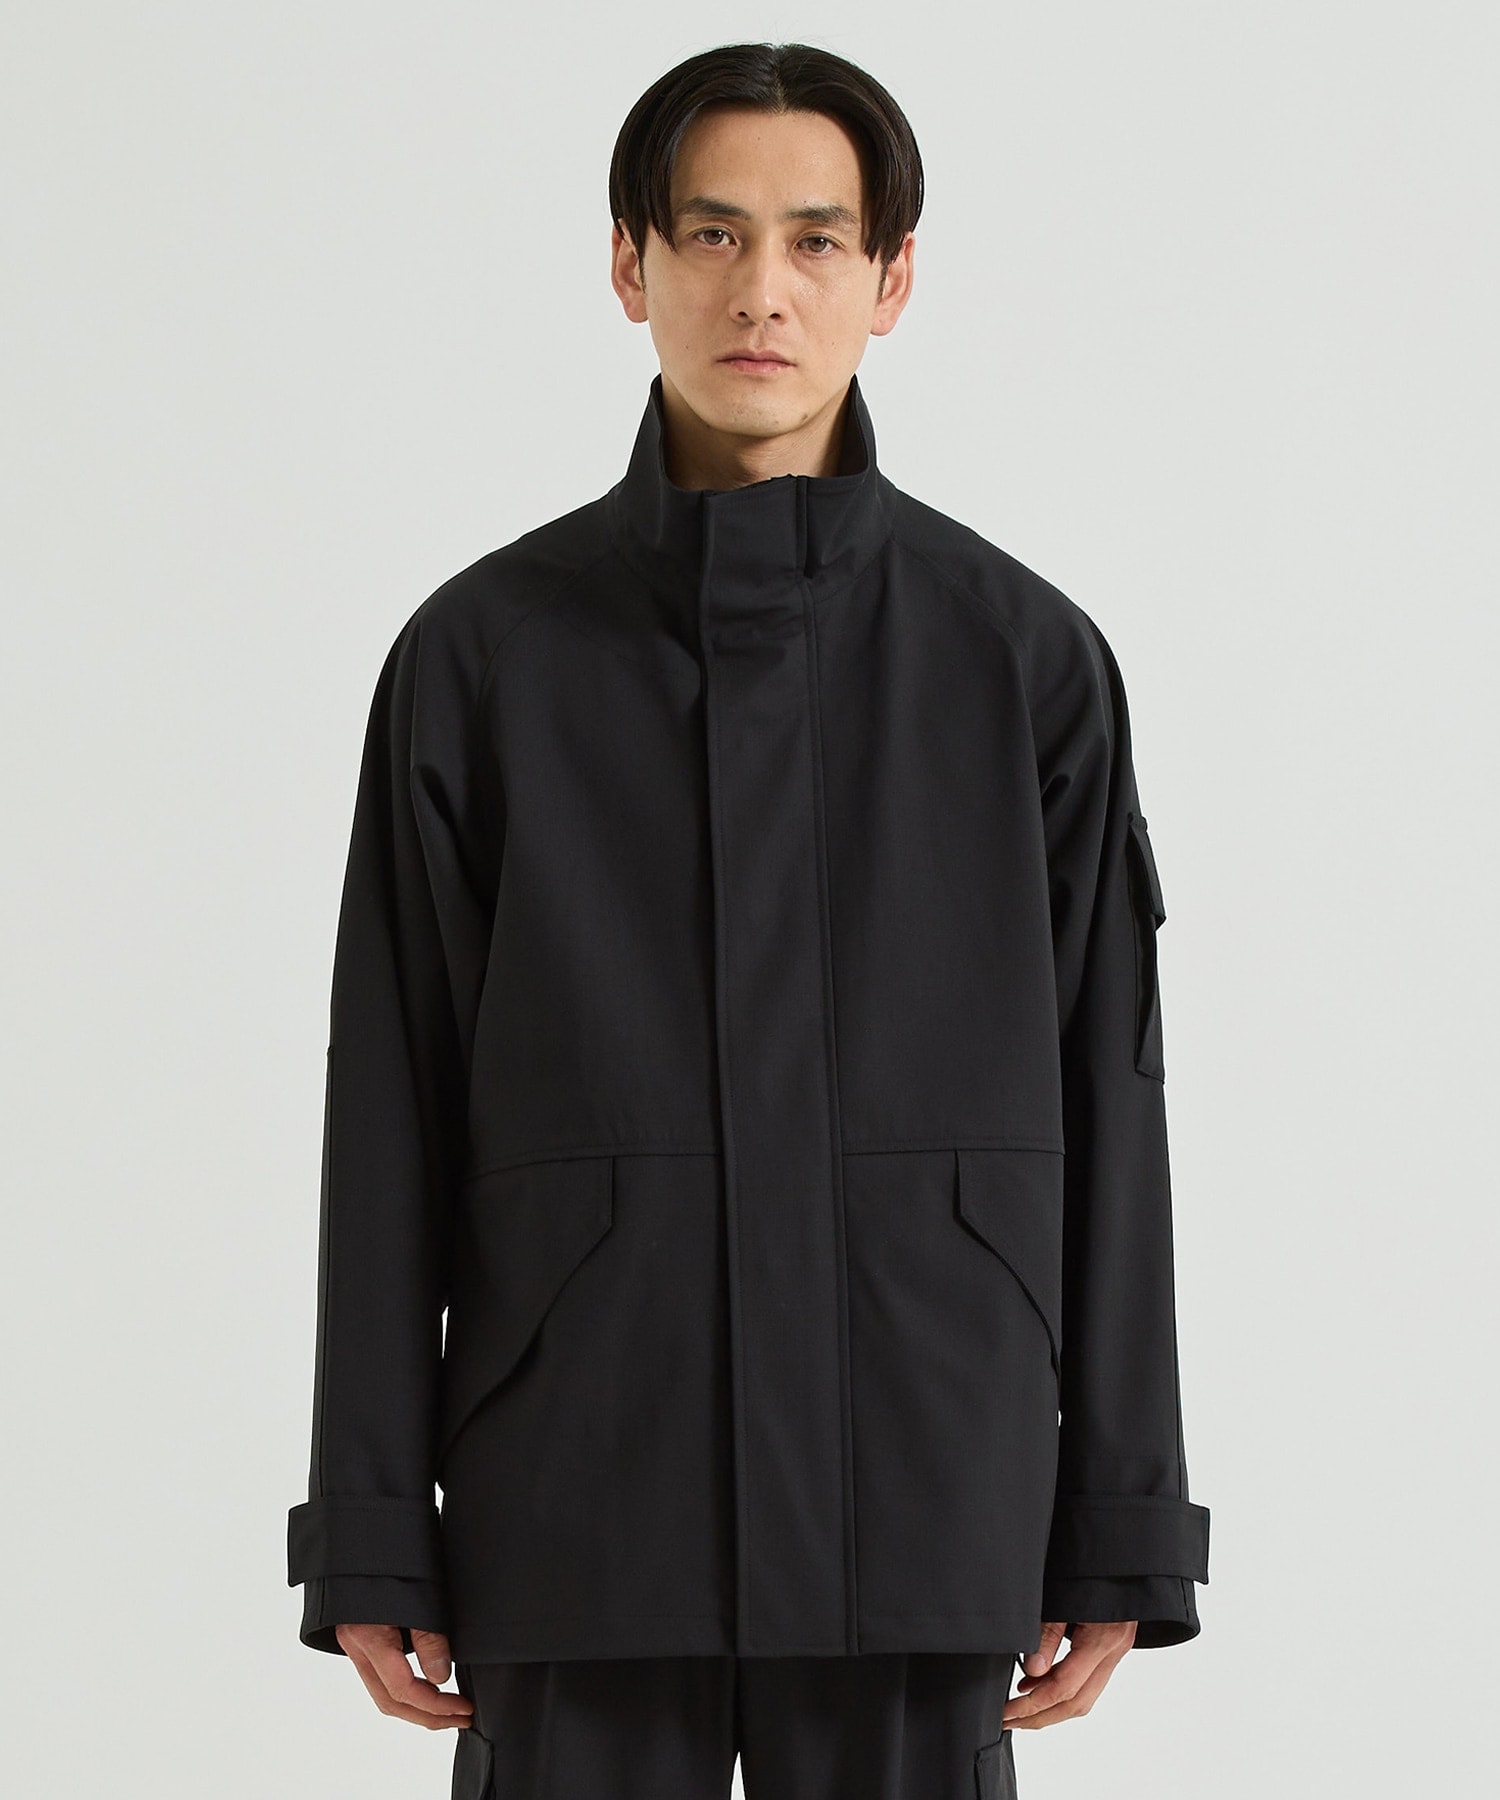 WTRK Wool Nylon Bonding Type ECWCS Jacket THE TOKYO